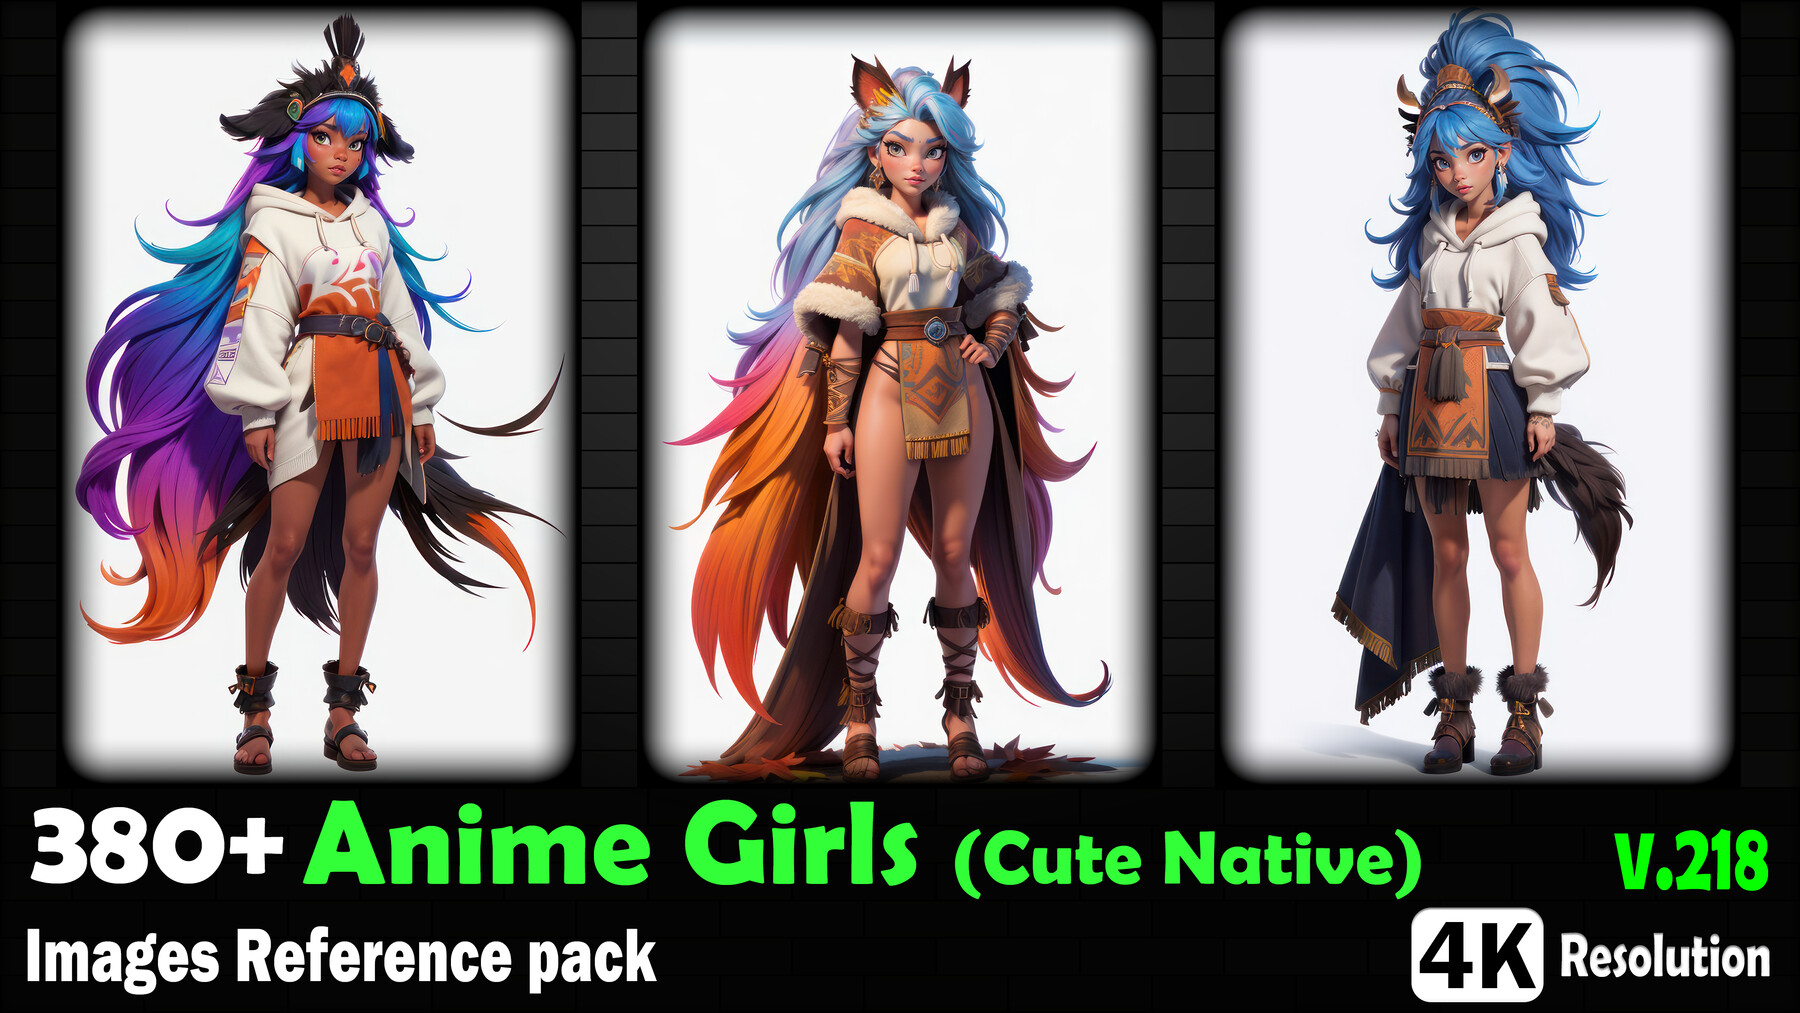 ArtStation - 380+ Anime Girls (Cute Native) Images Reference Pack - 4K  Resolution - V.218